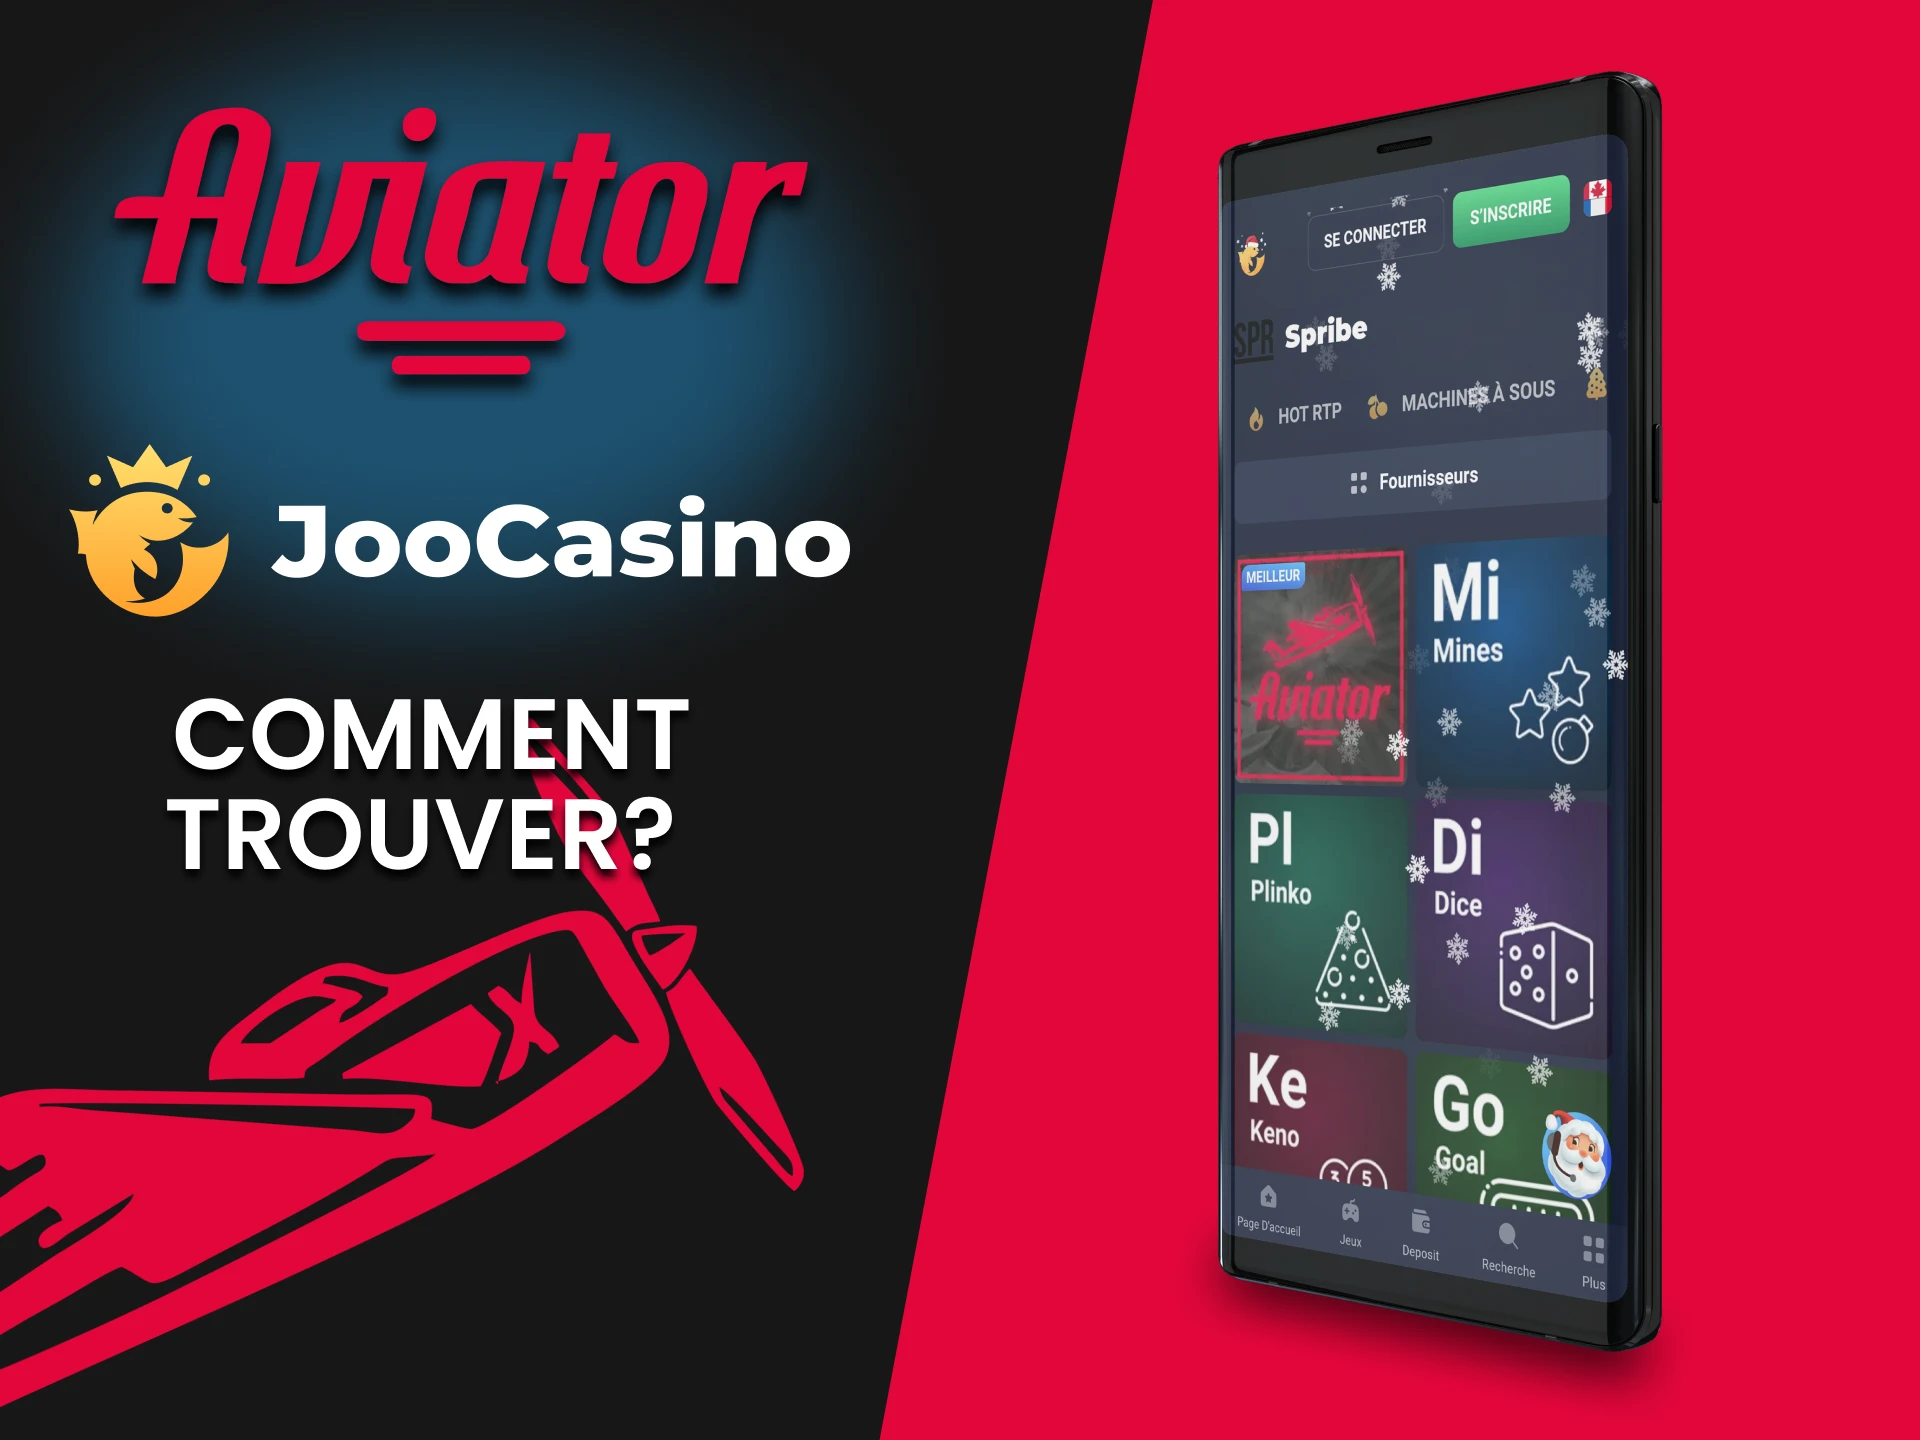 Choisissez Aviator dans la section casino de l'application Joo Casino.